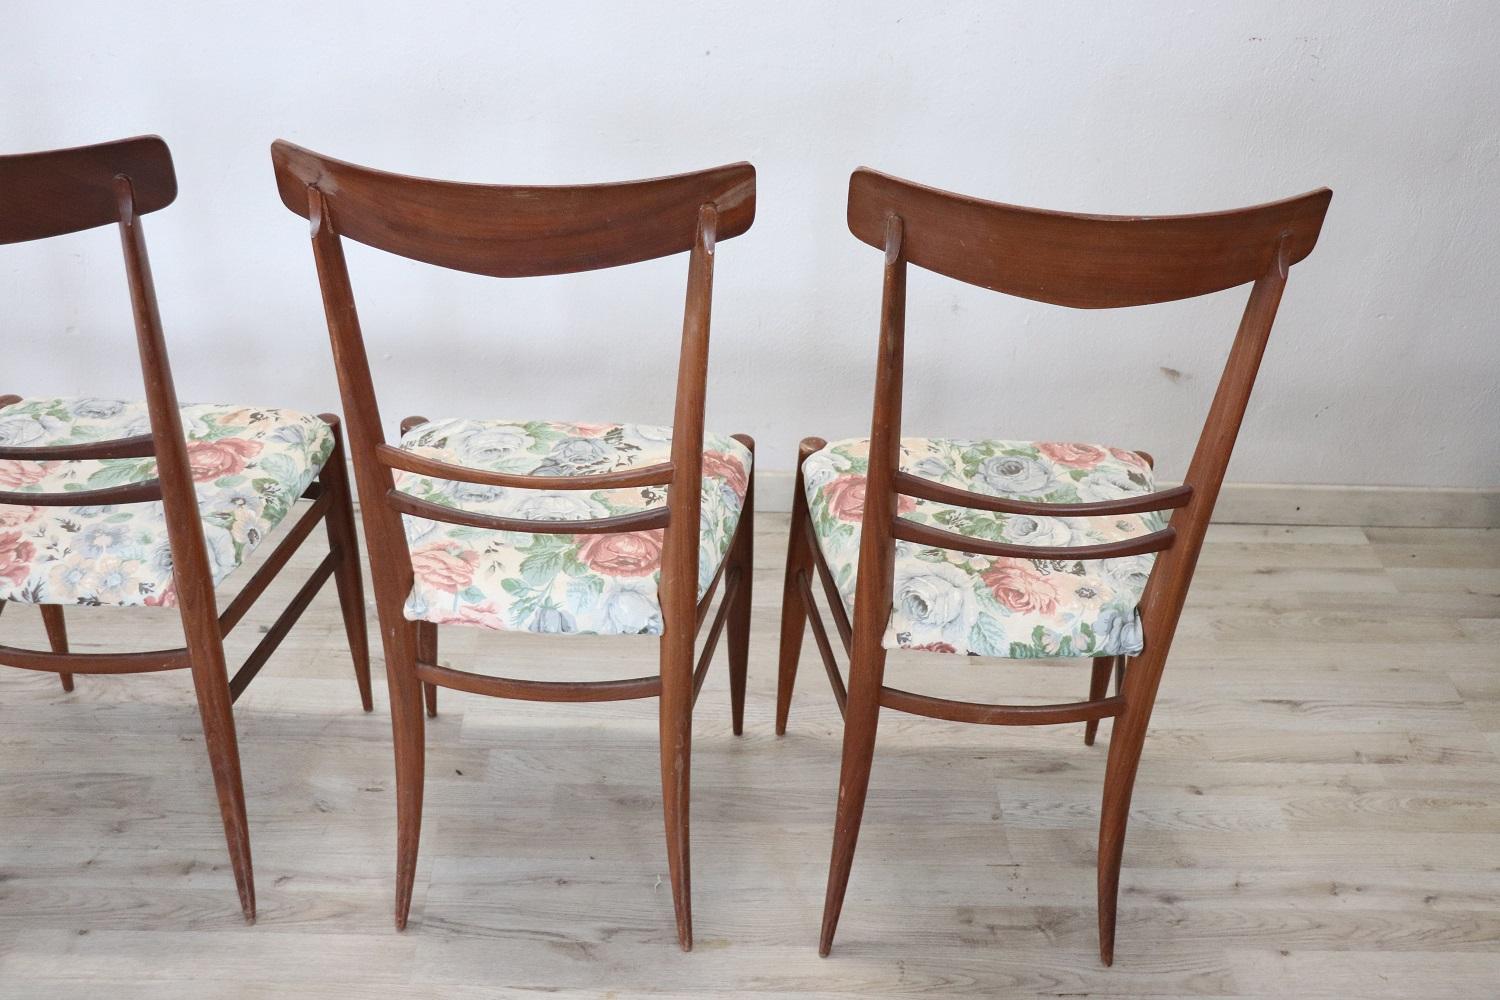 20th Century Italian Design Set of Four Chairs in Teak, Ico Parisi 1950s For Sale 7